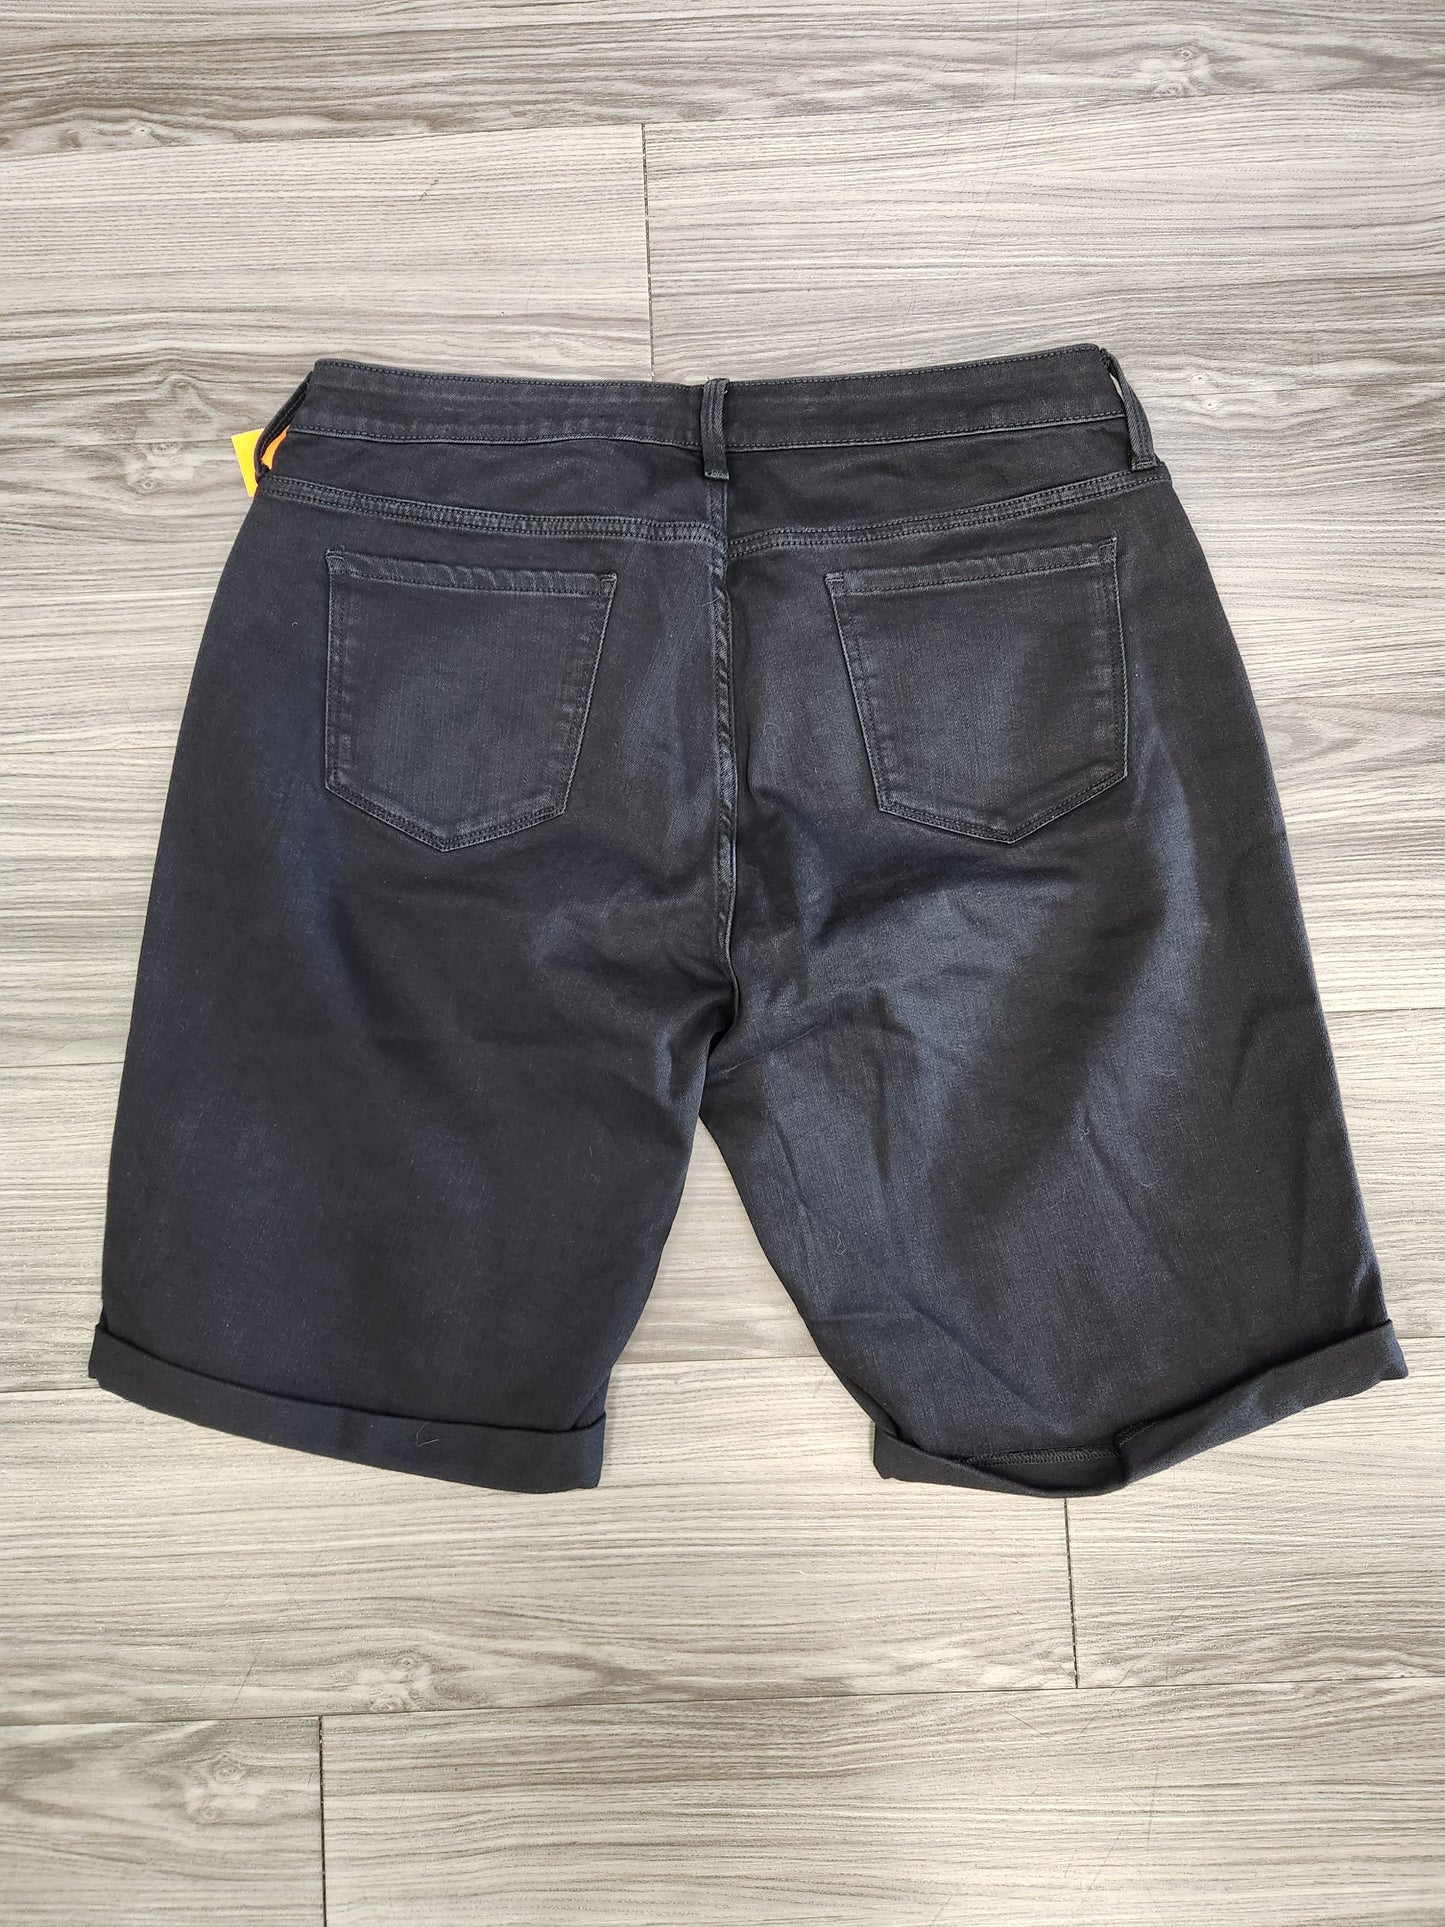 Shorts By St Johns Bay  Size: 18